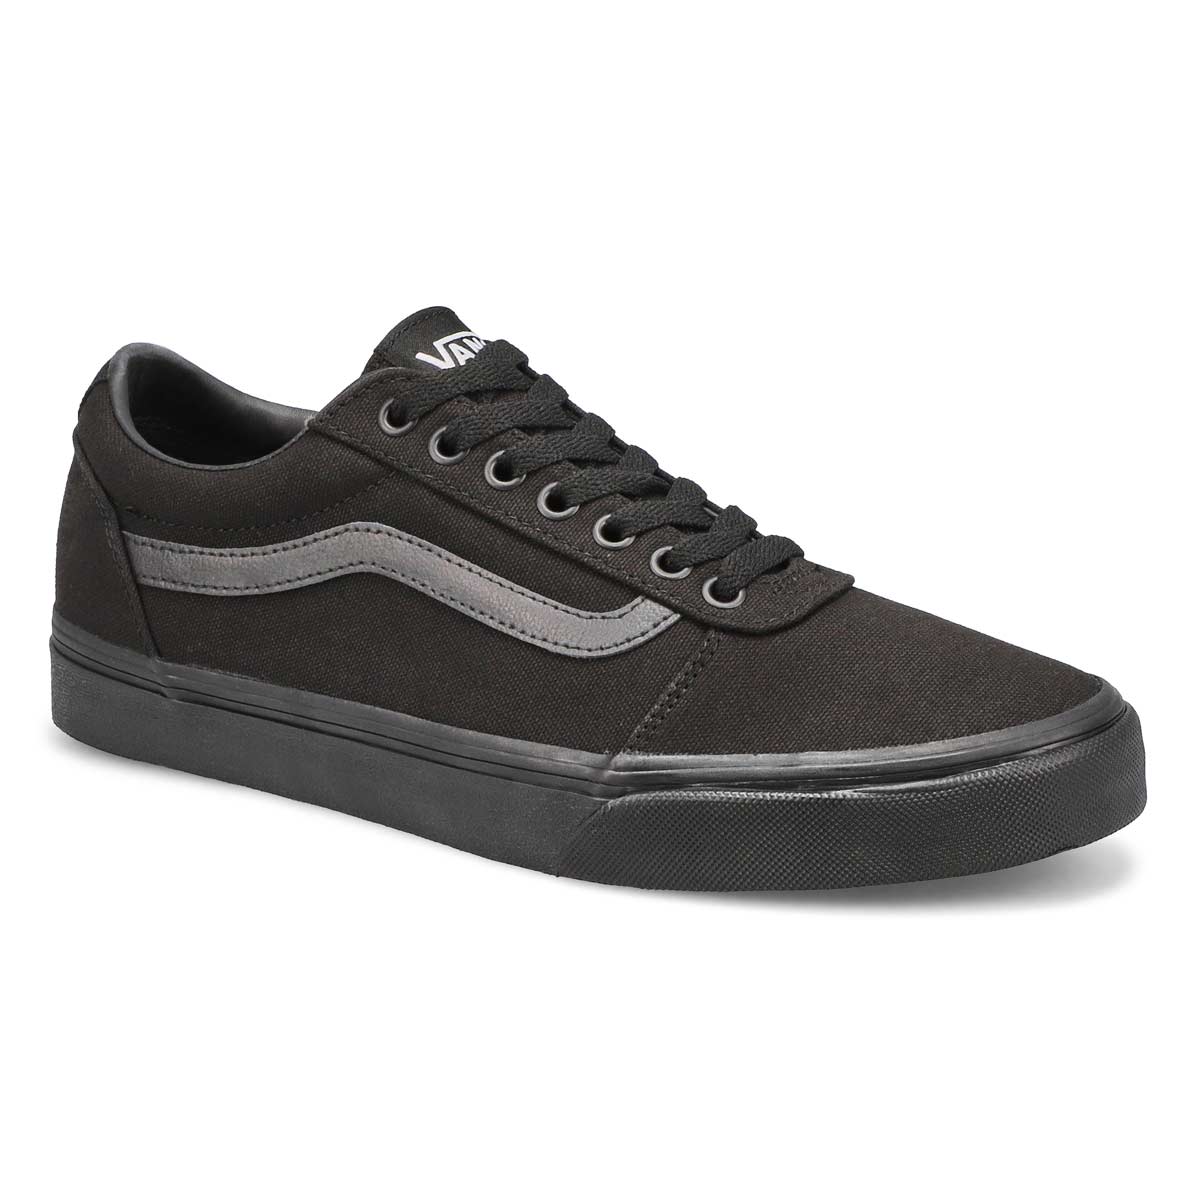 Vans Men's Ward Sneaker - Black/Black 